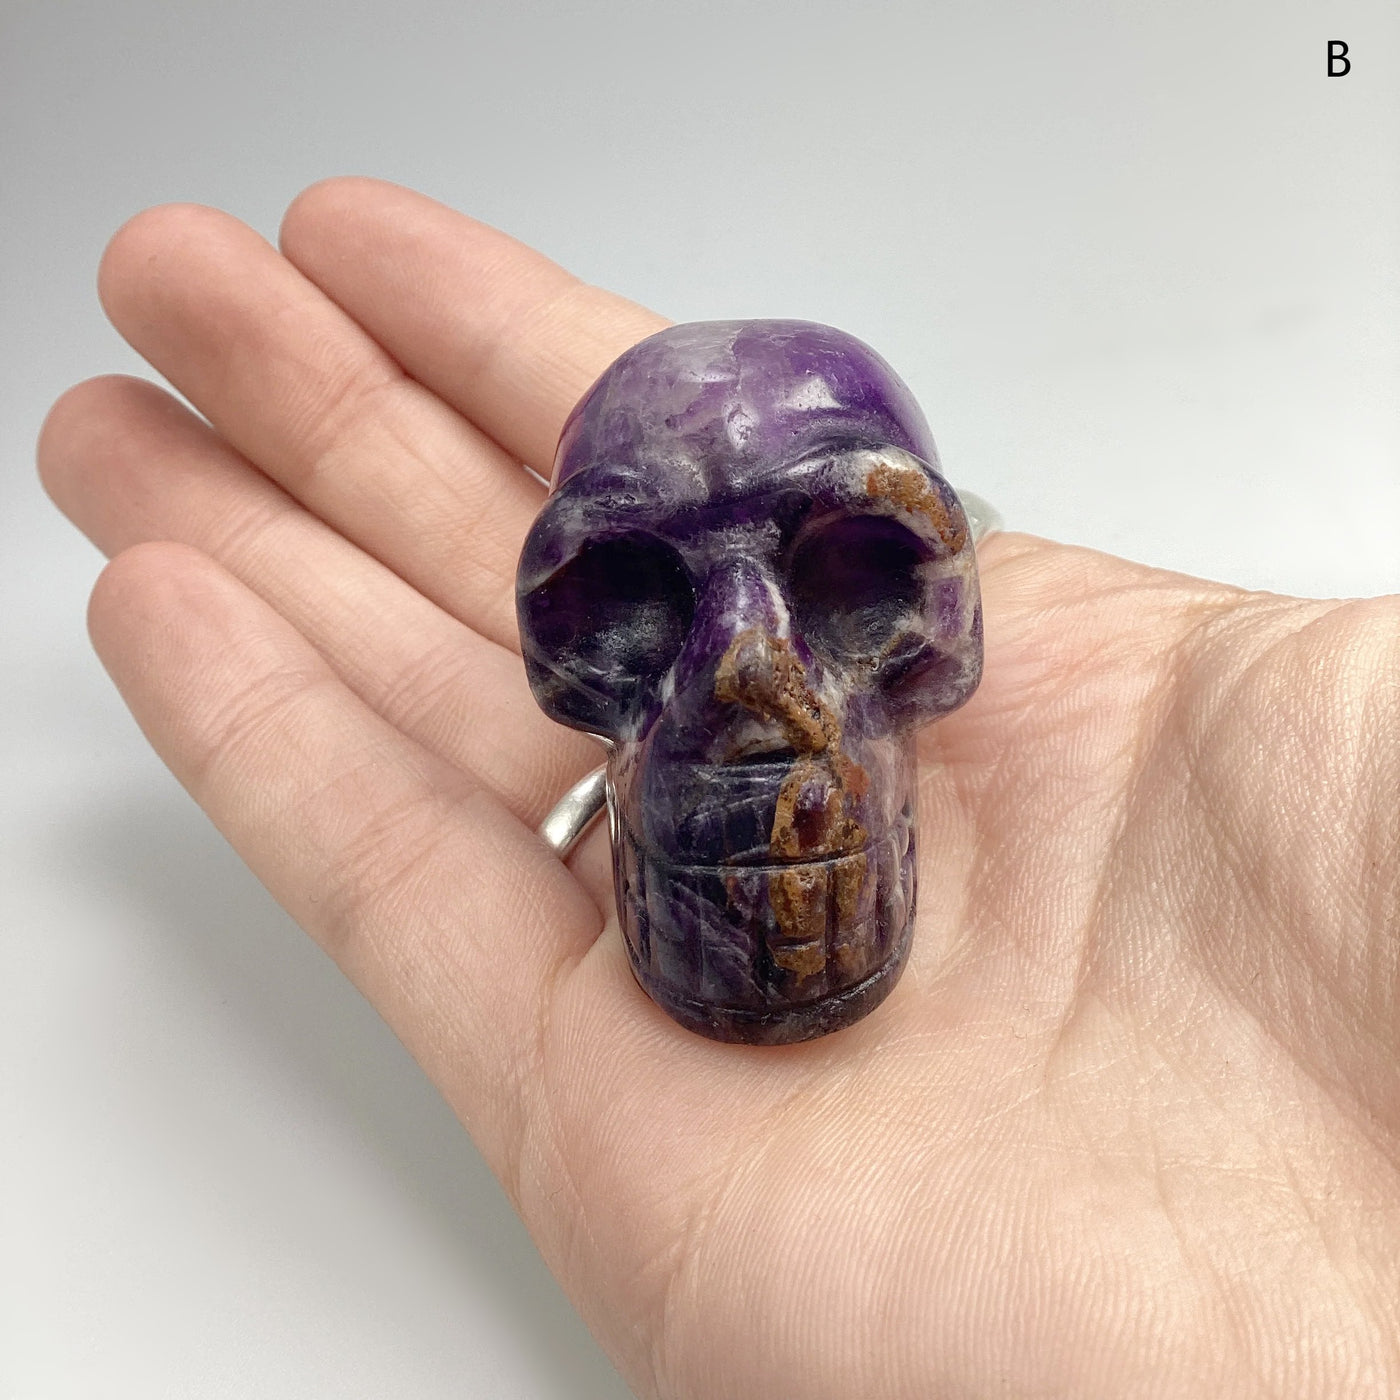 Carved Chevron Amethyst Skull at $69 Each